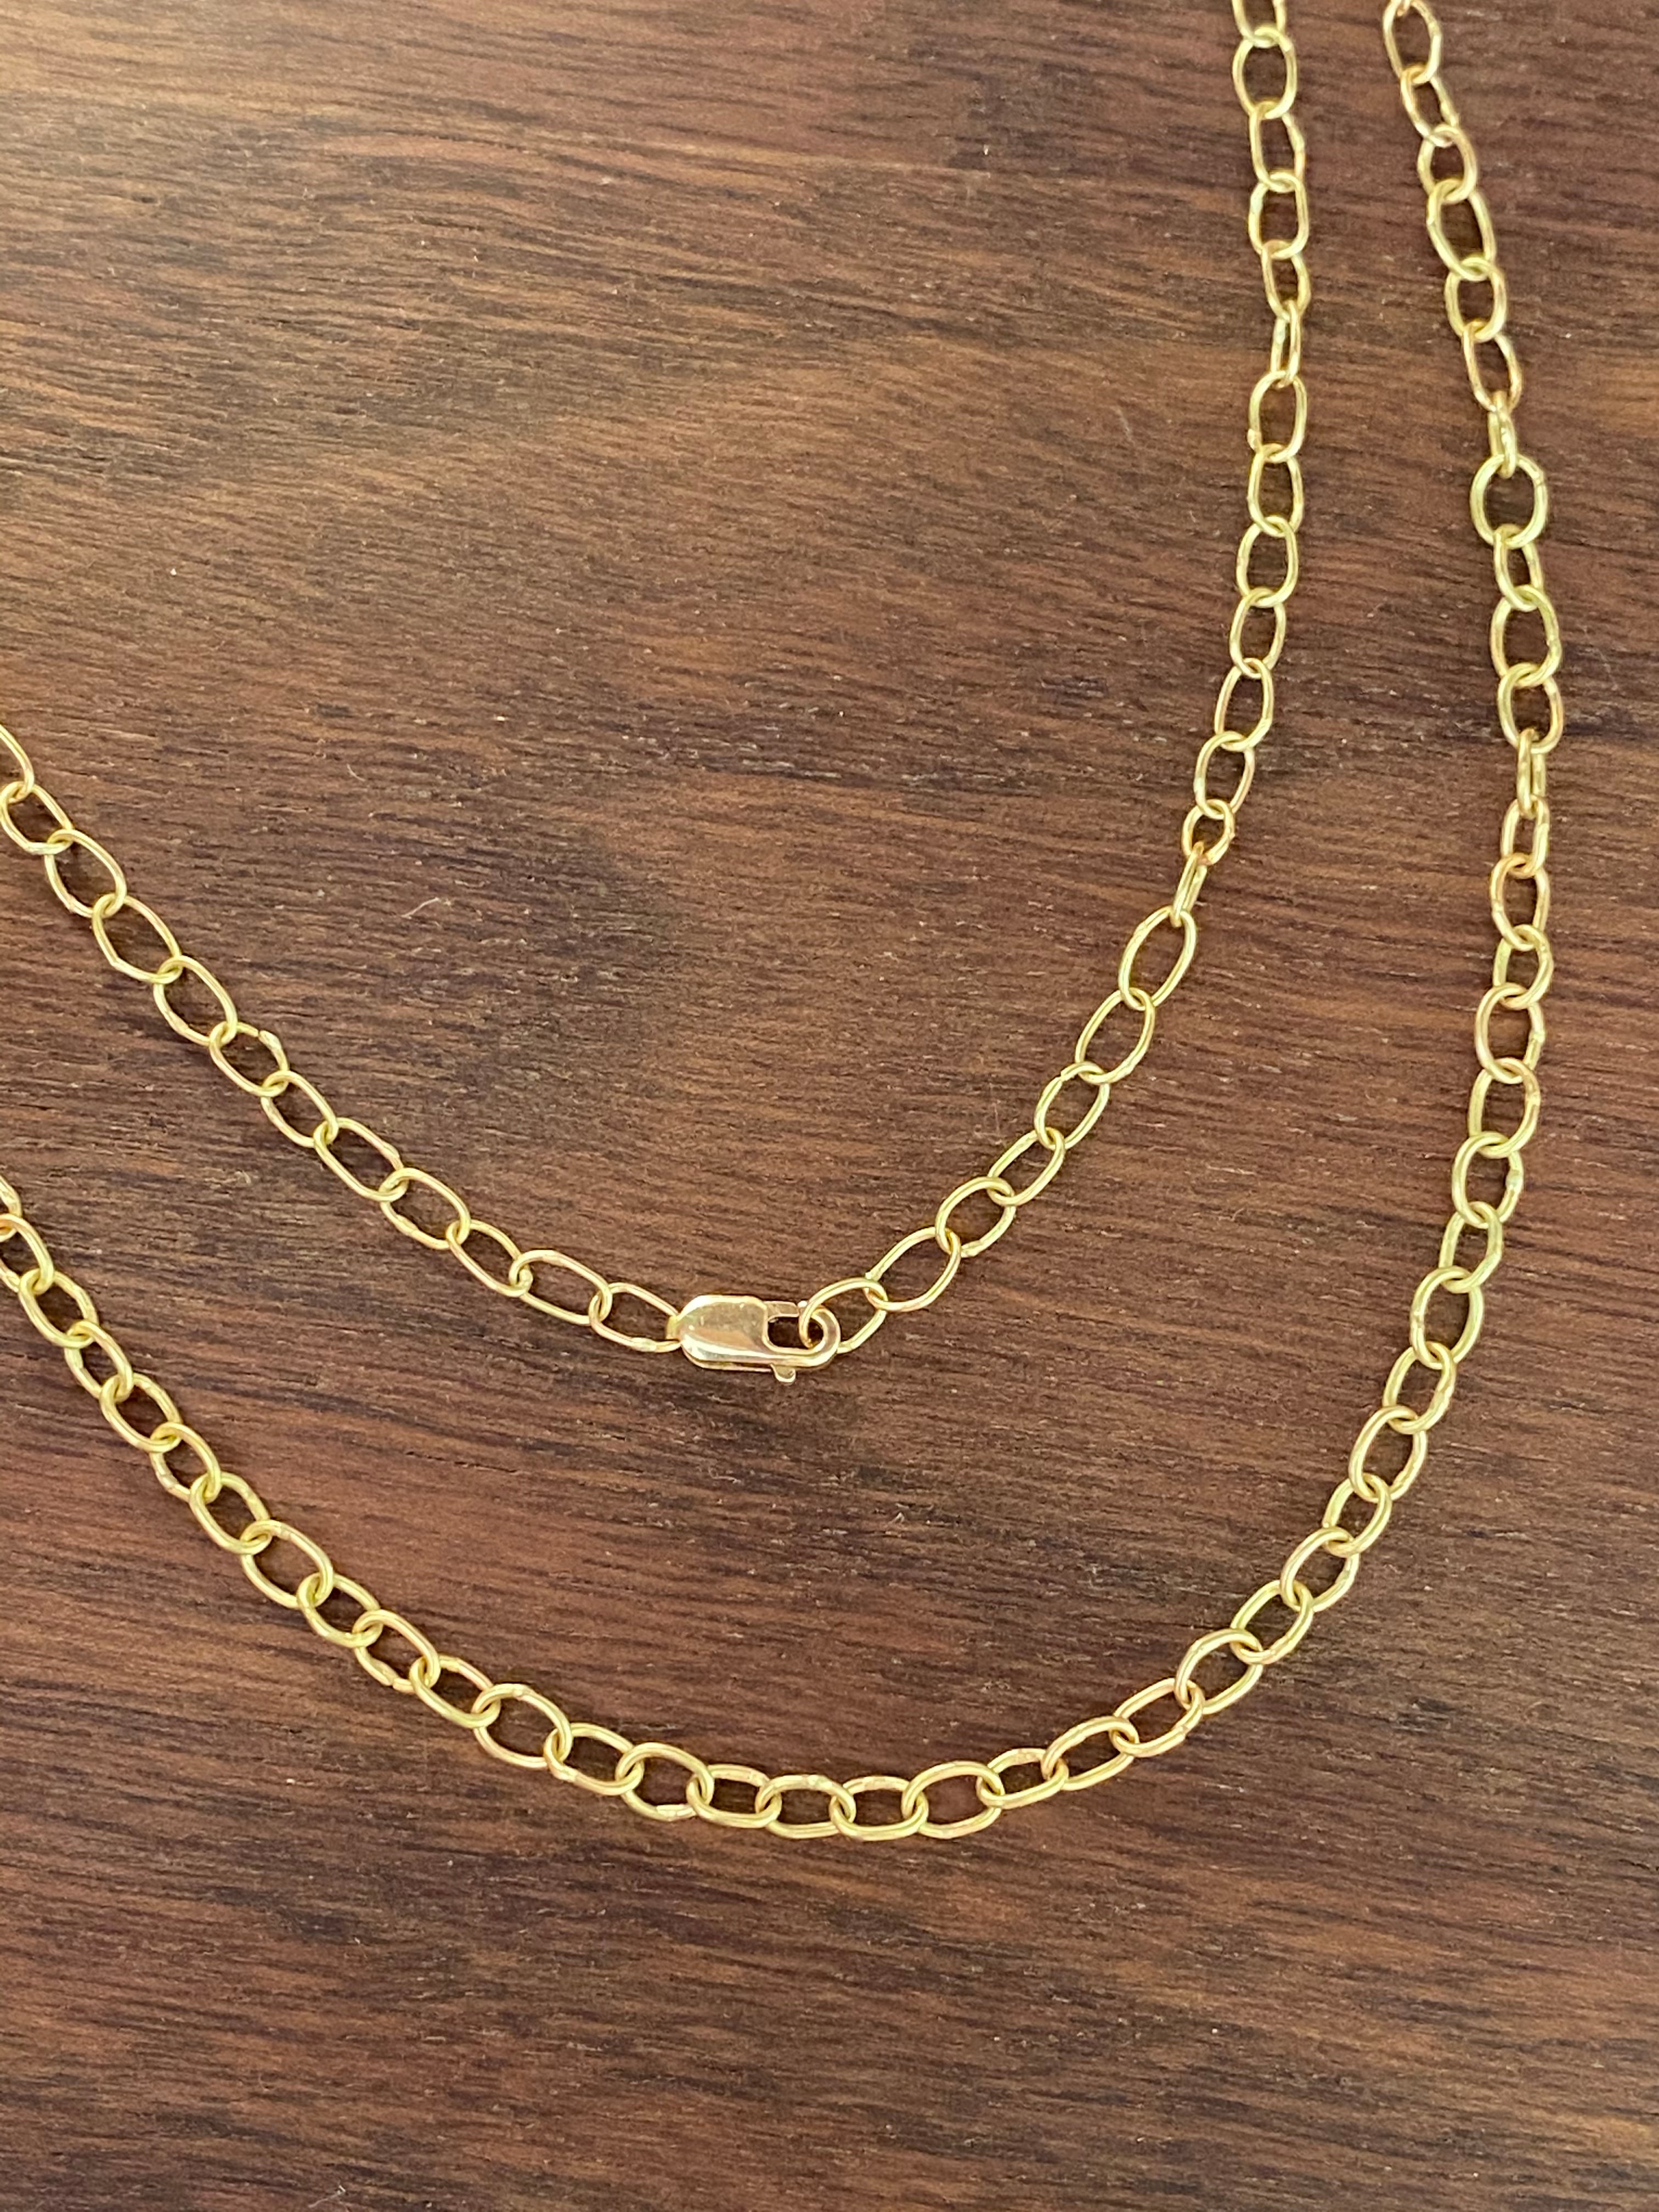 Siedra Loeffler- Petite Oval Handmade Chain